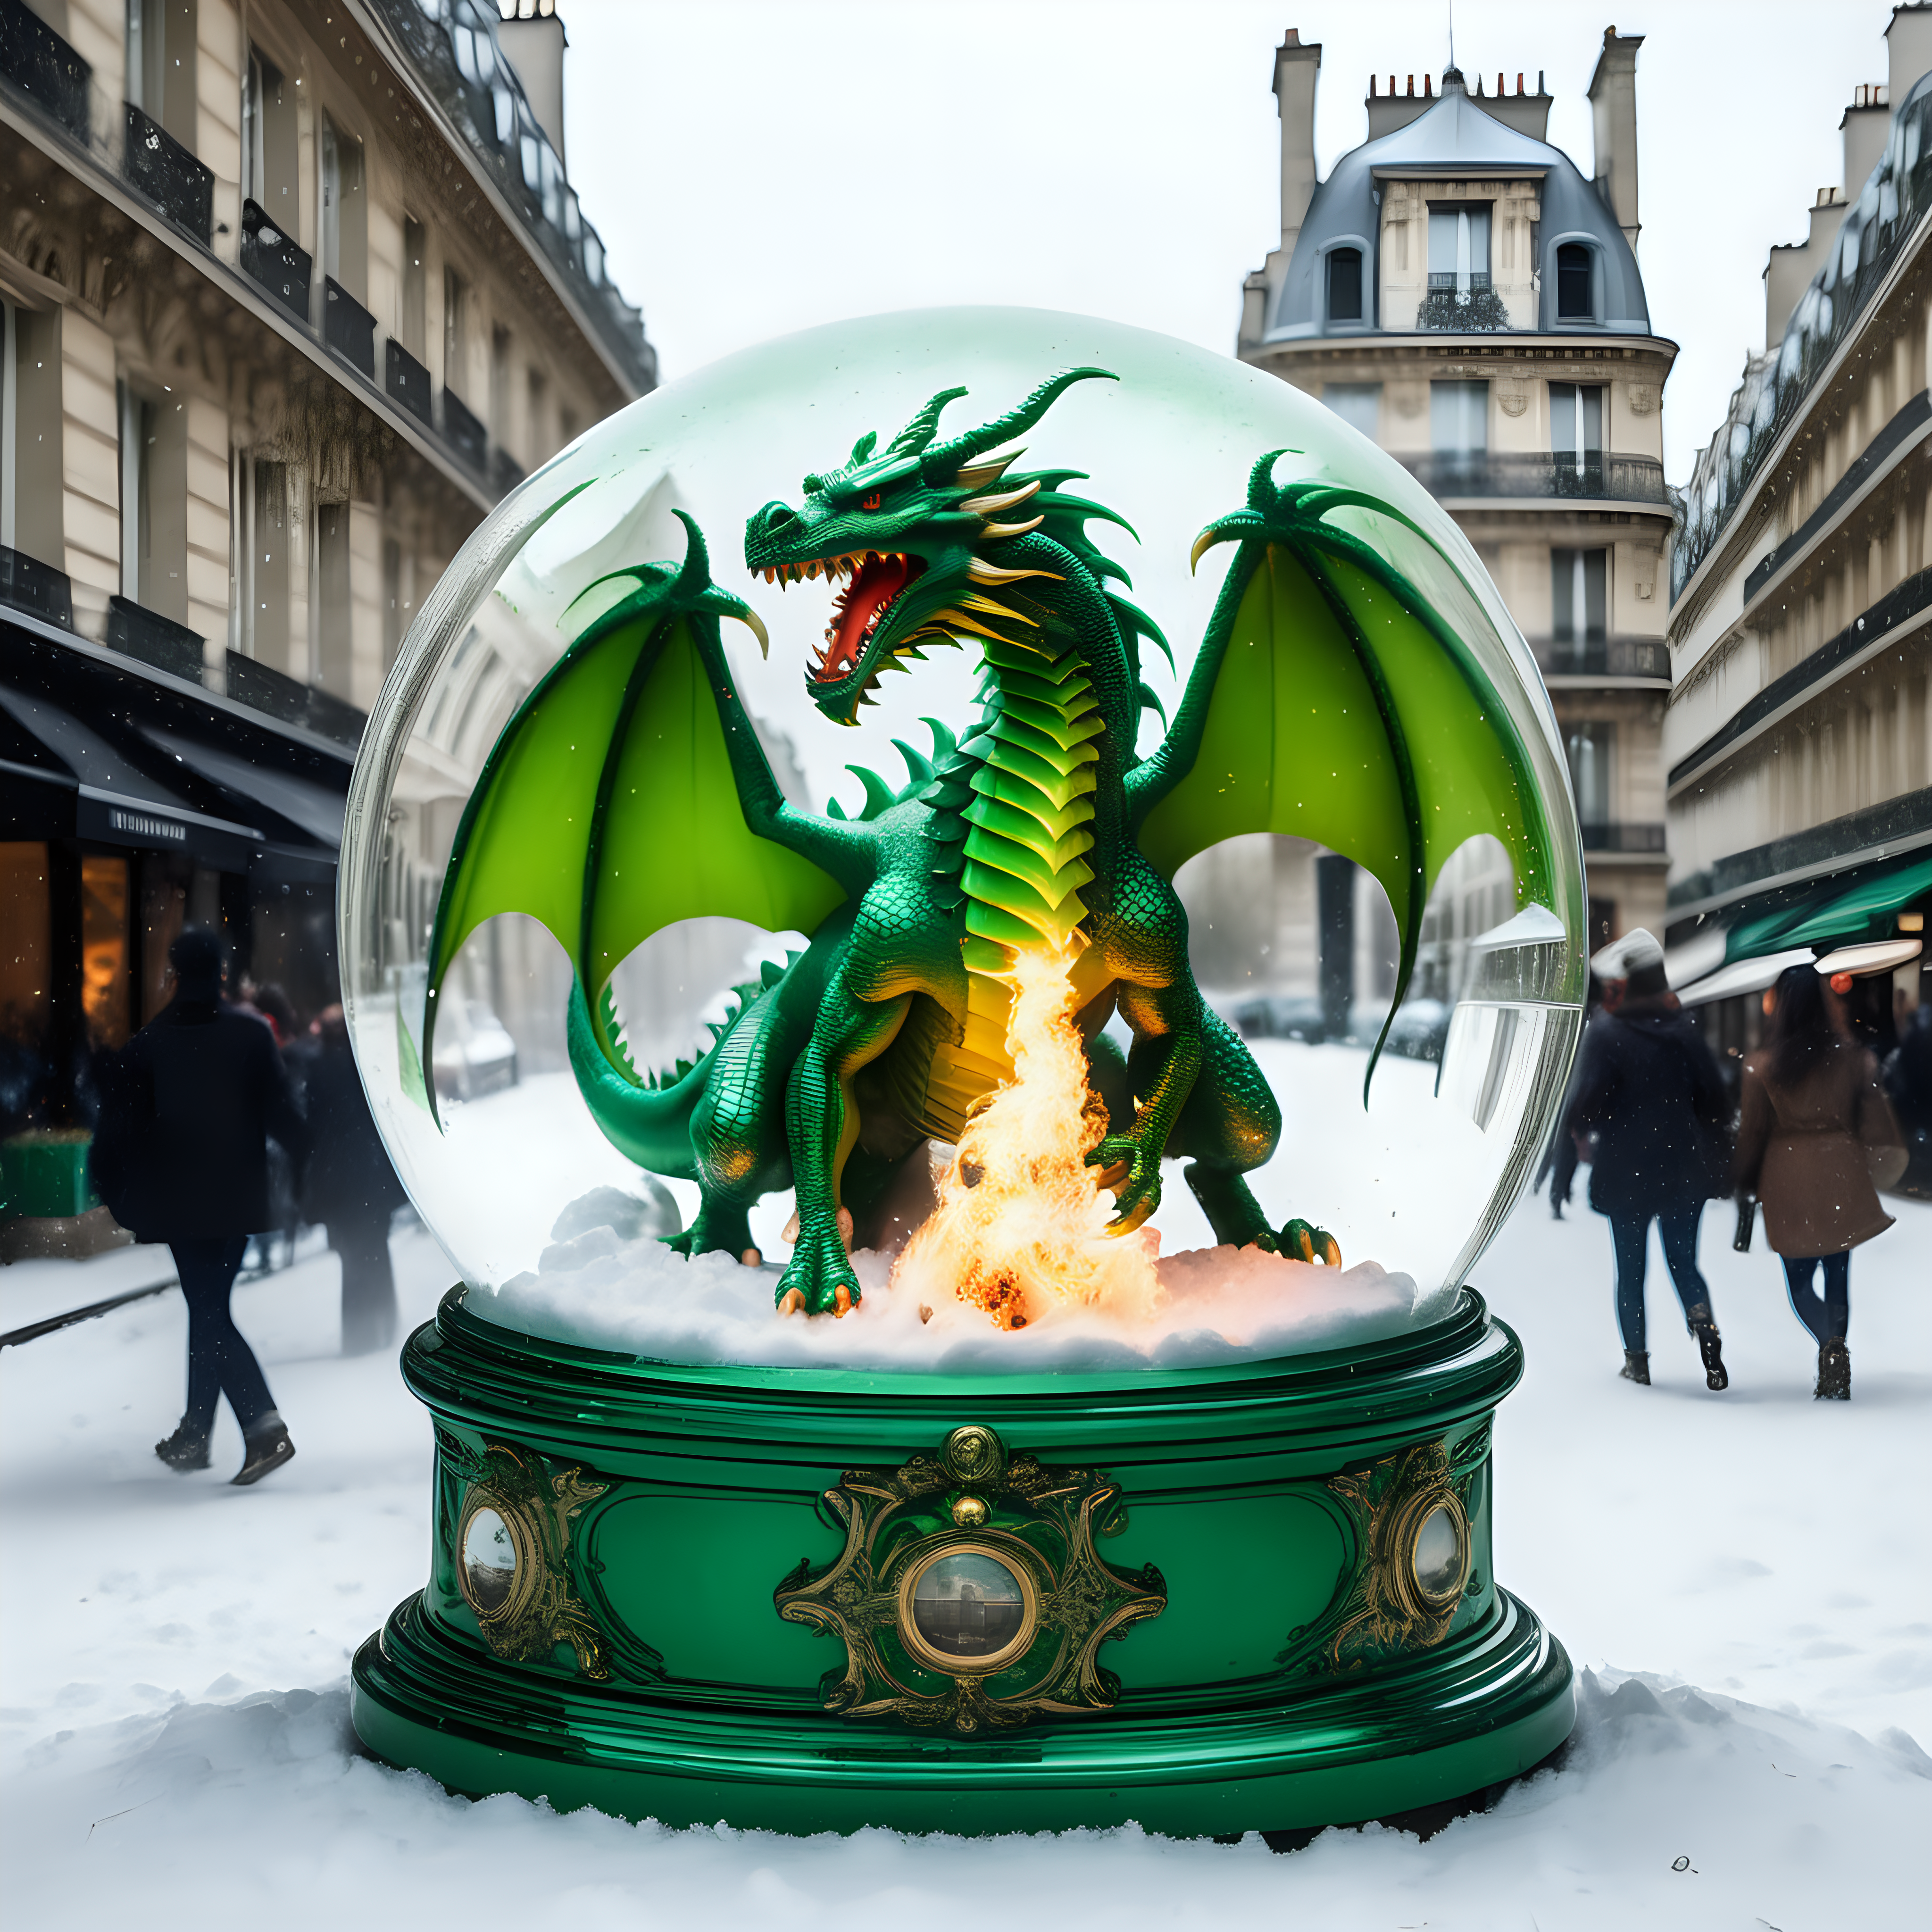 green 2 headed fire breathing dragon destroying Paris